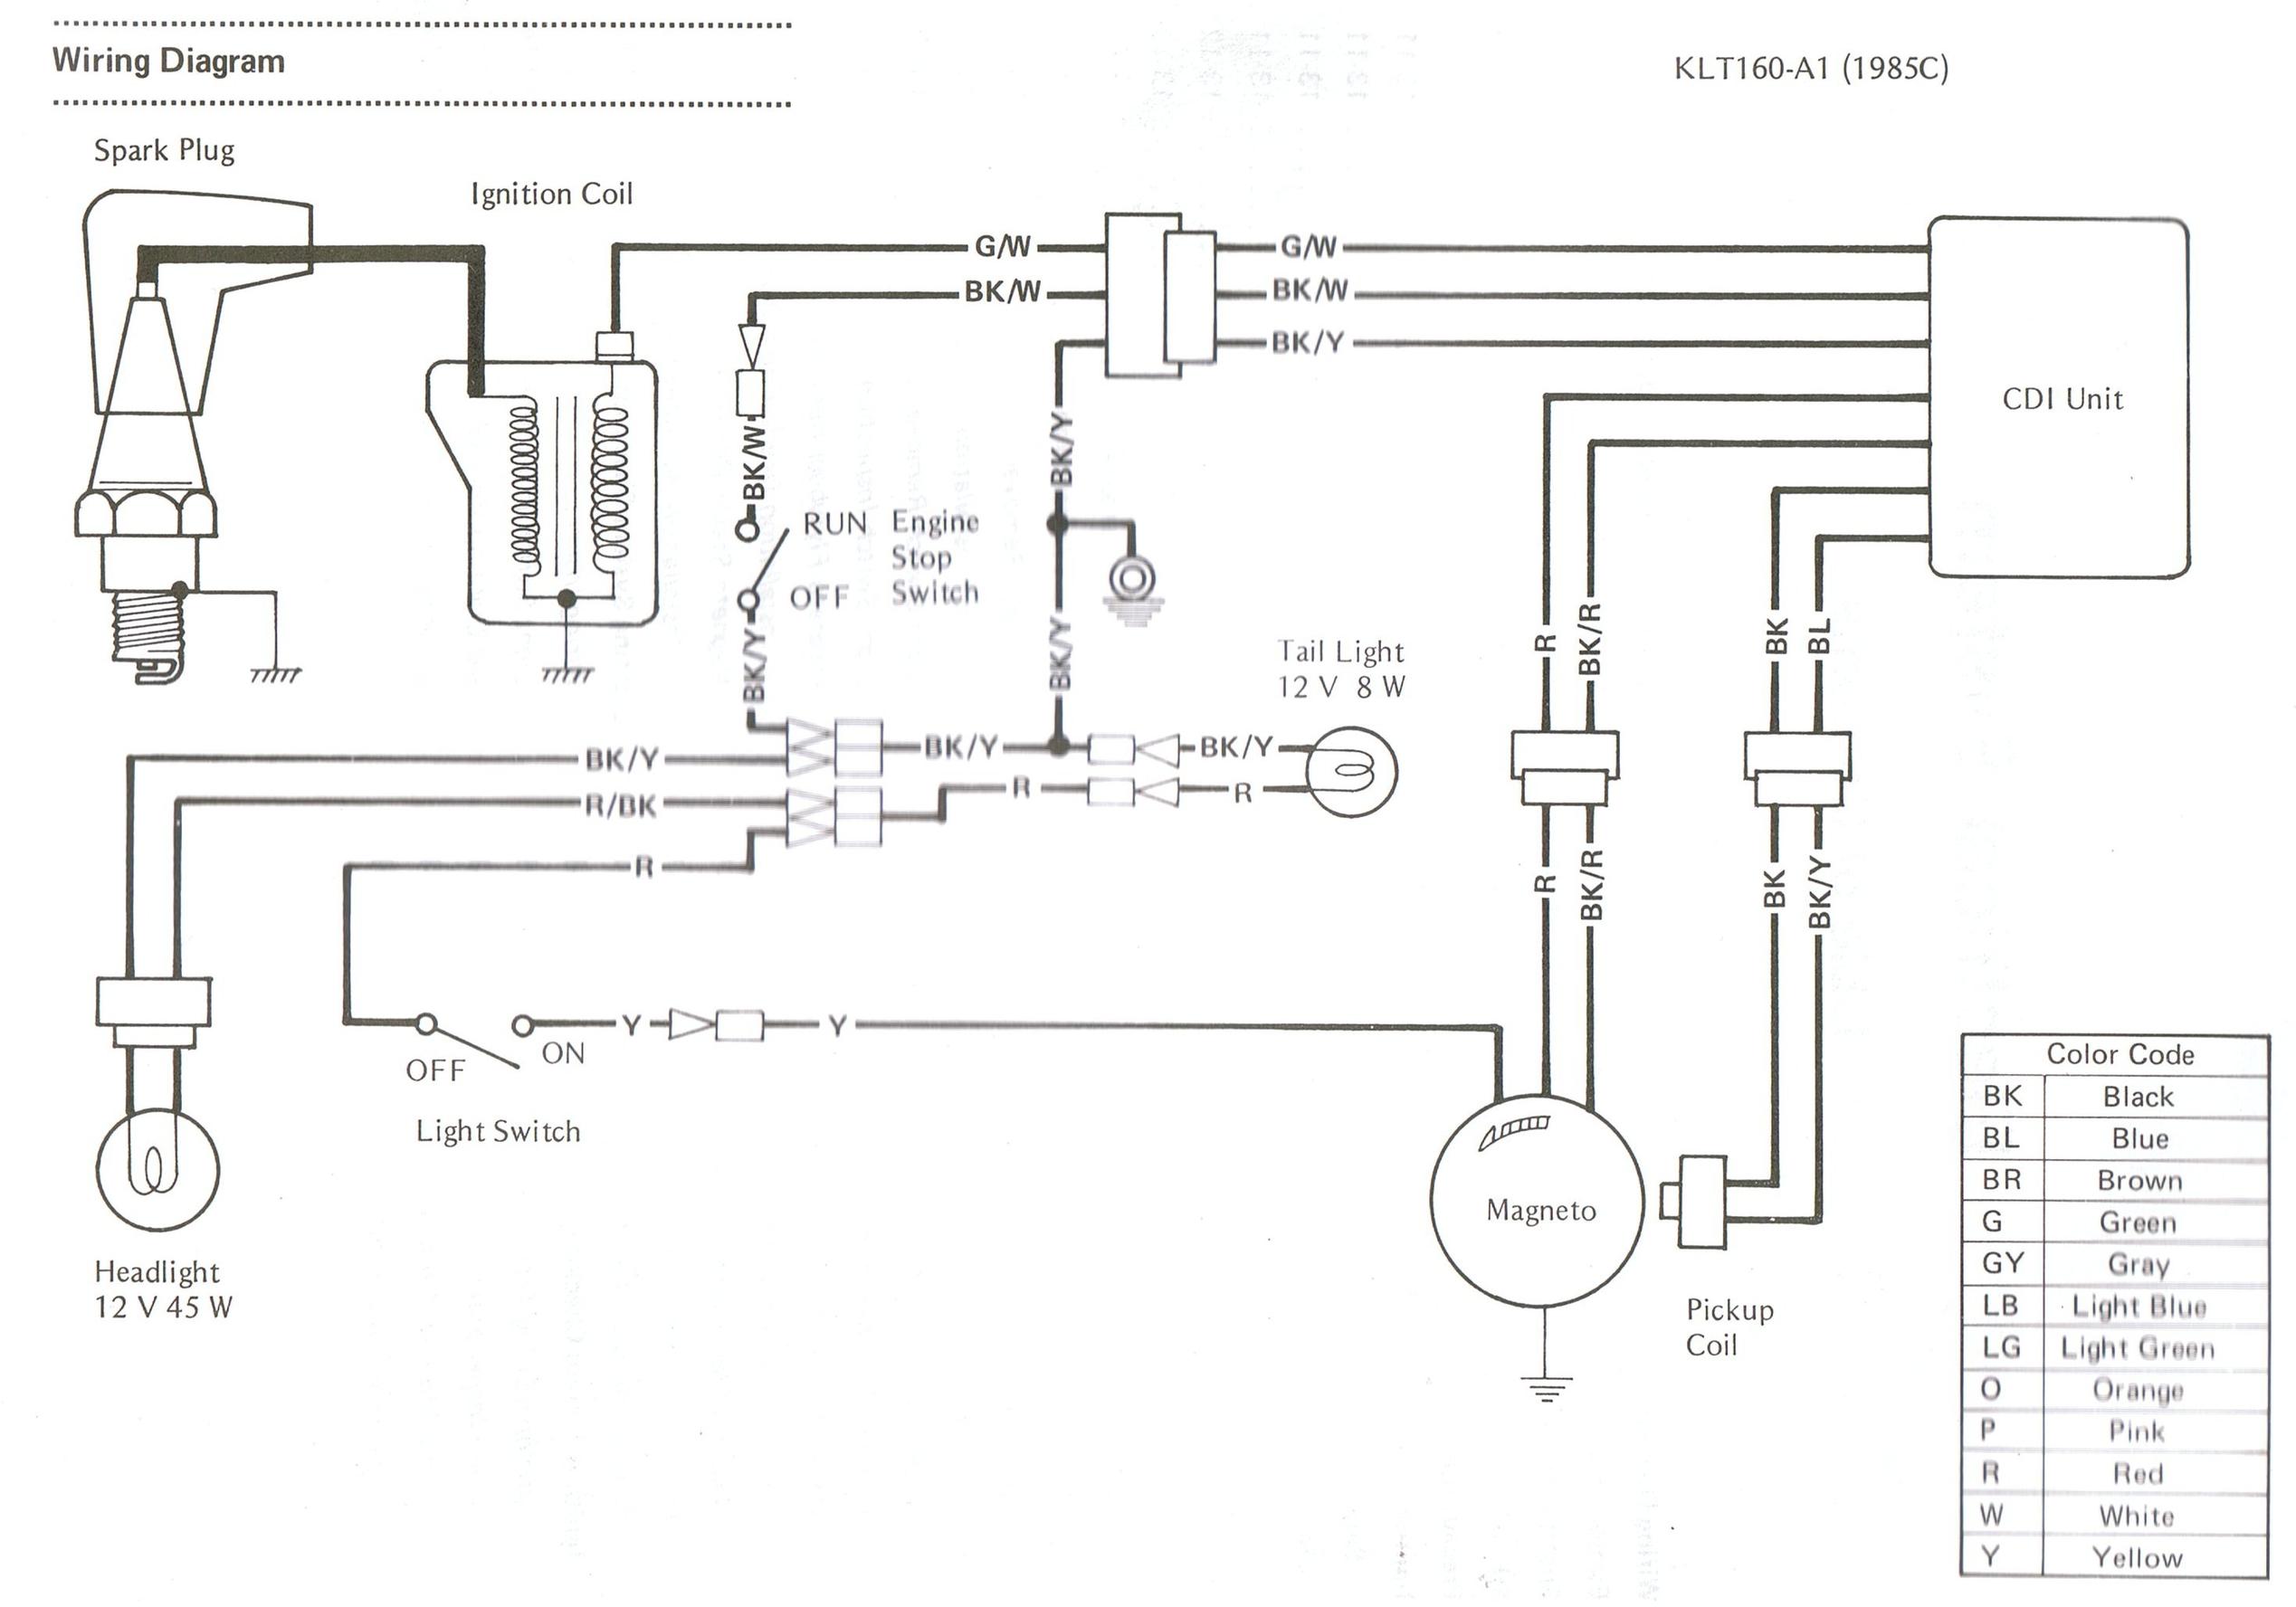 1985 Kawasaki Wiring Diagram - Wiring Diagrams Schema -  expose.wheeladvisor.it